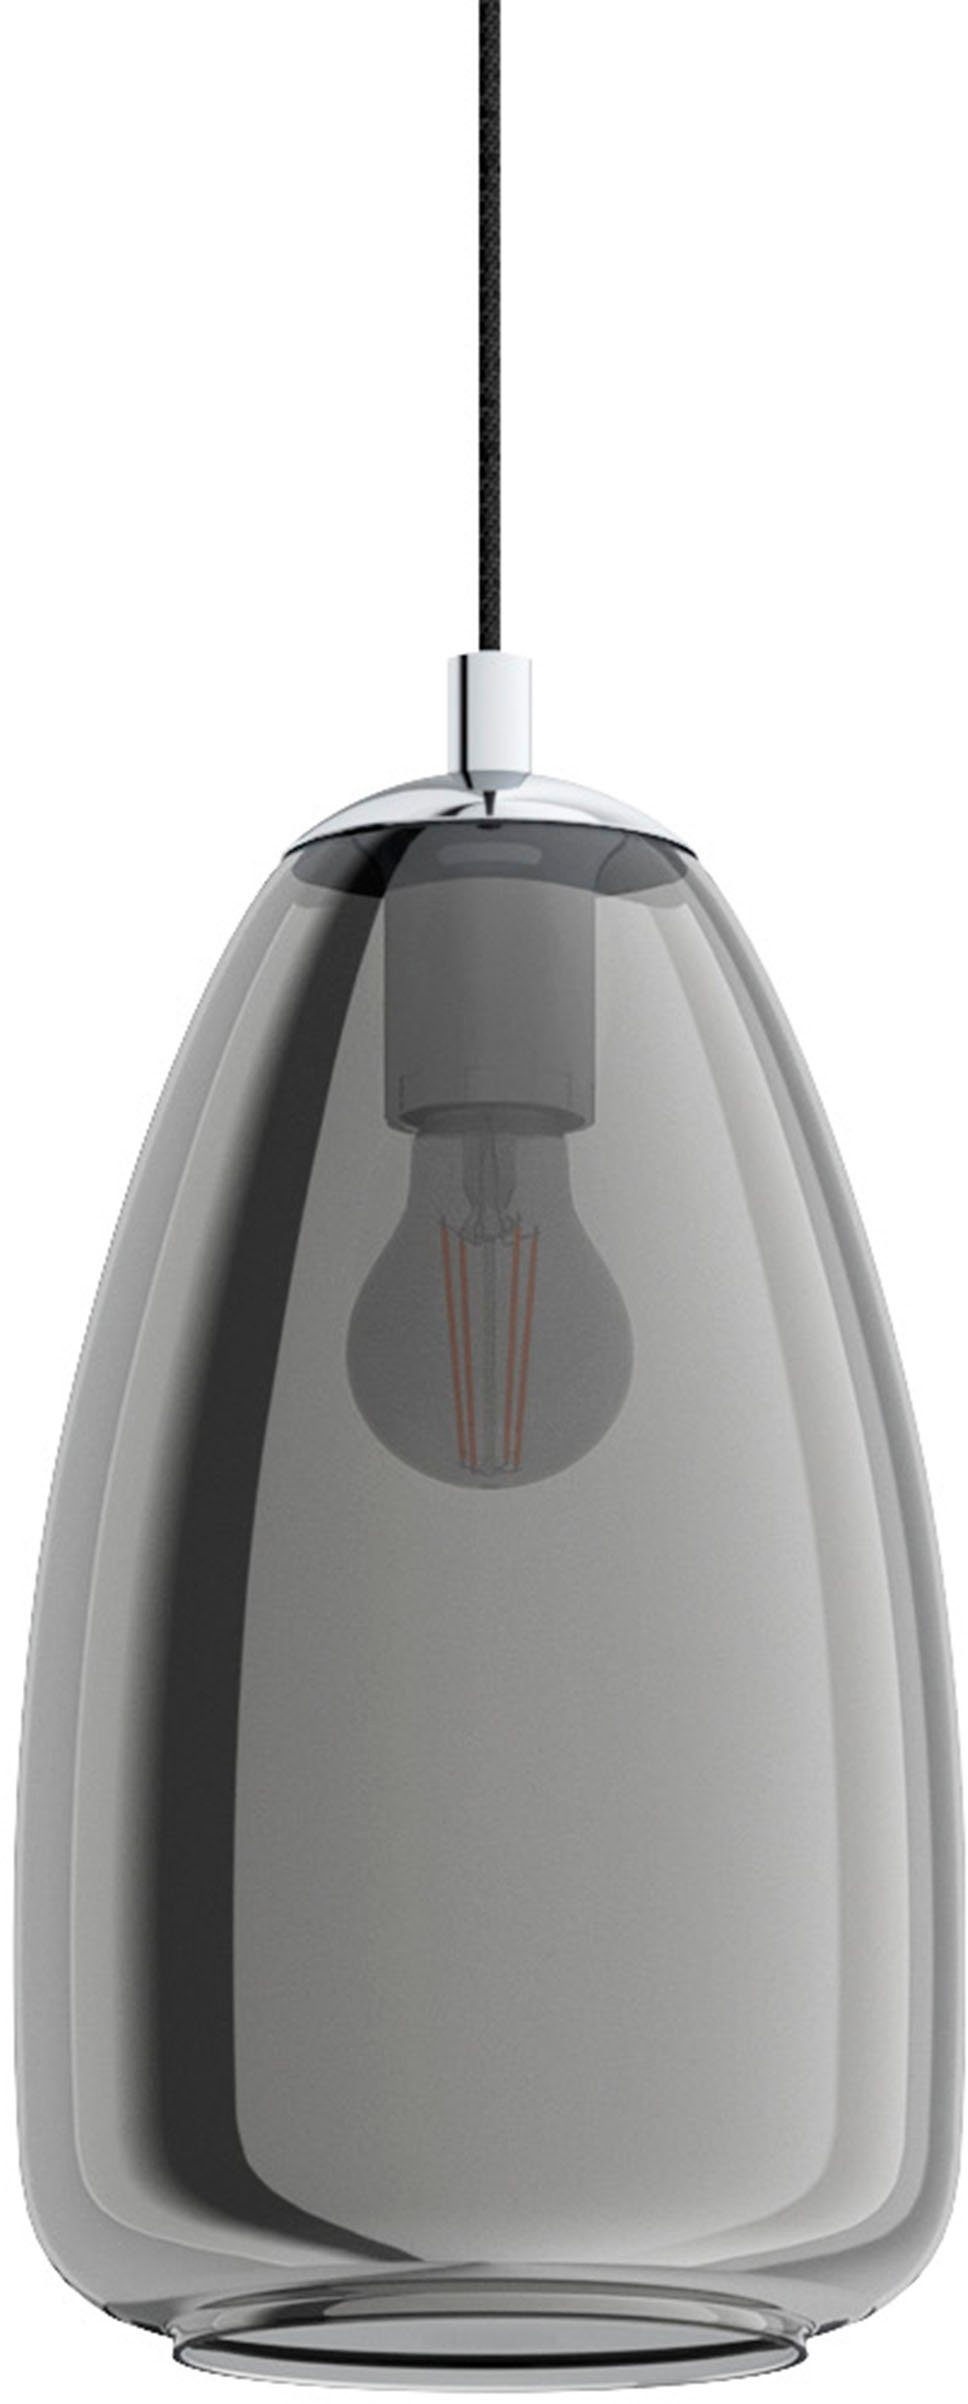 eglo hanglamp alobrase chroom - oe20 x h110 cm - hanglamp - eettafellamp - keuken grijs